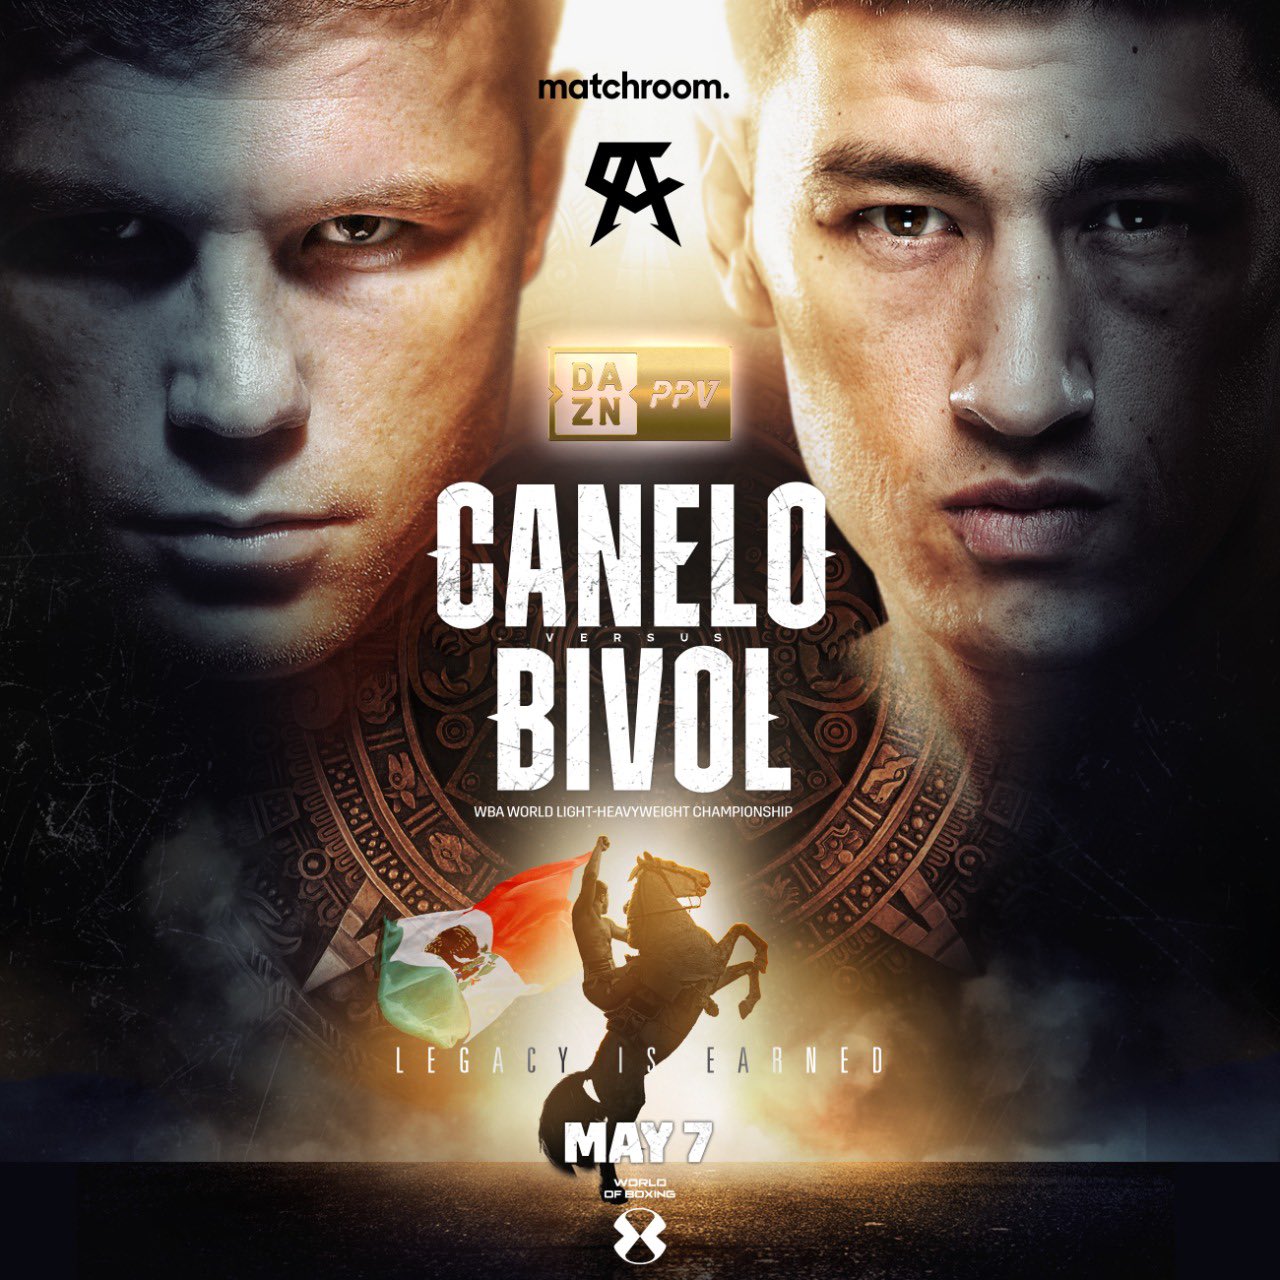 Cartel de la pelea 'Canelo' vs Bivol. Foto: Twitter @Canelo